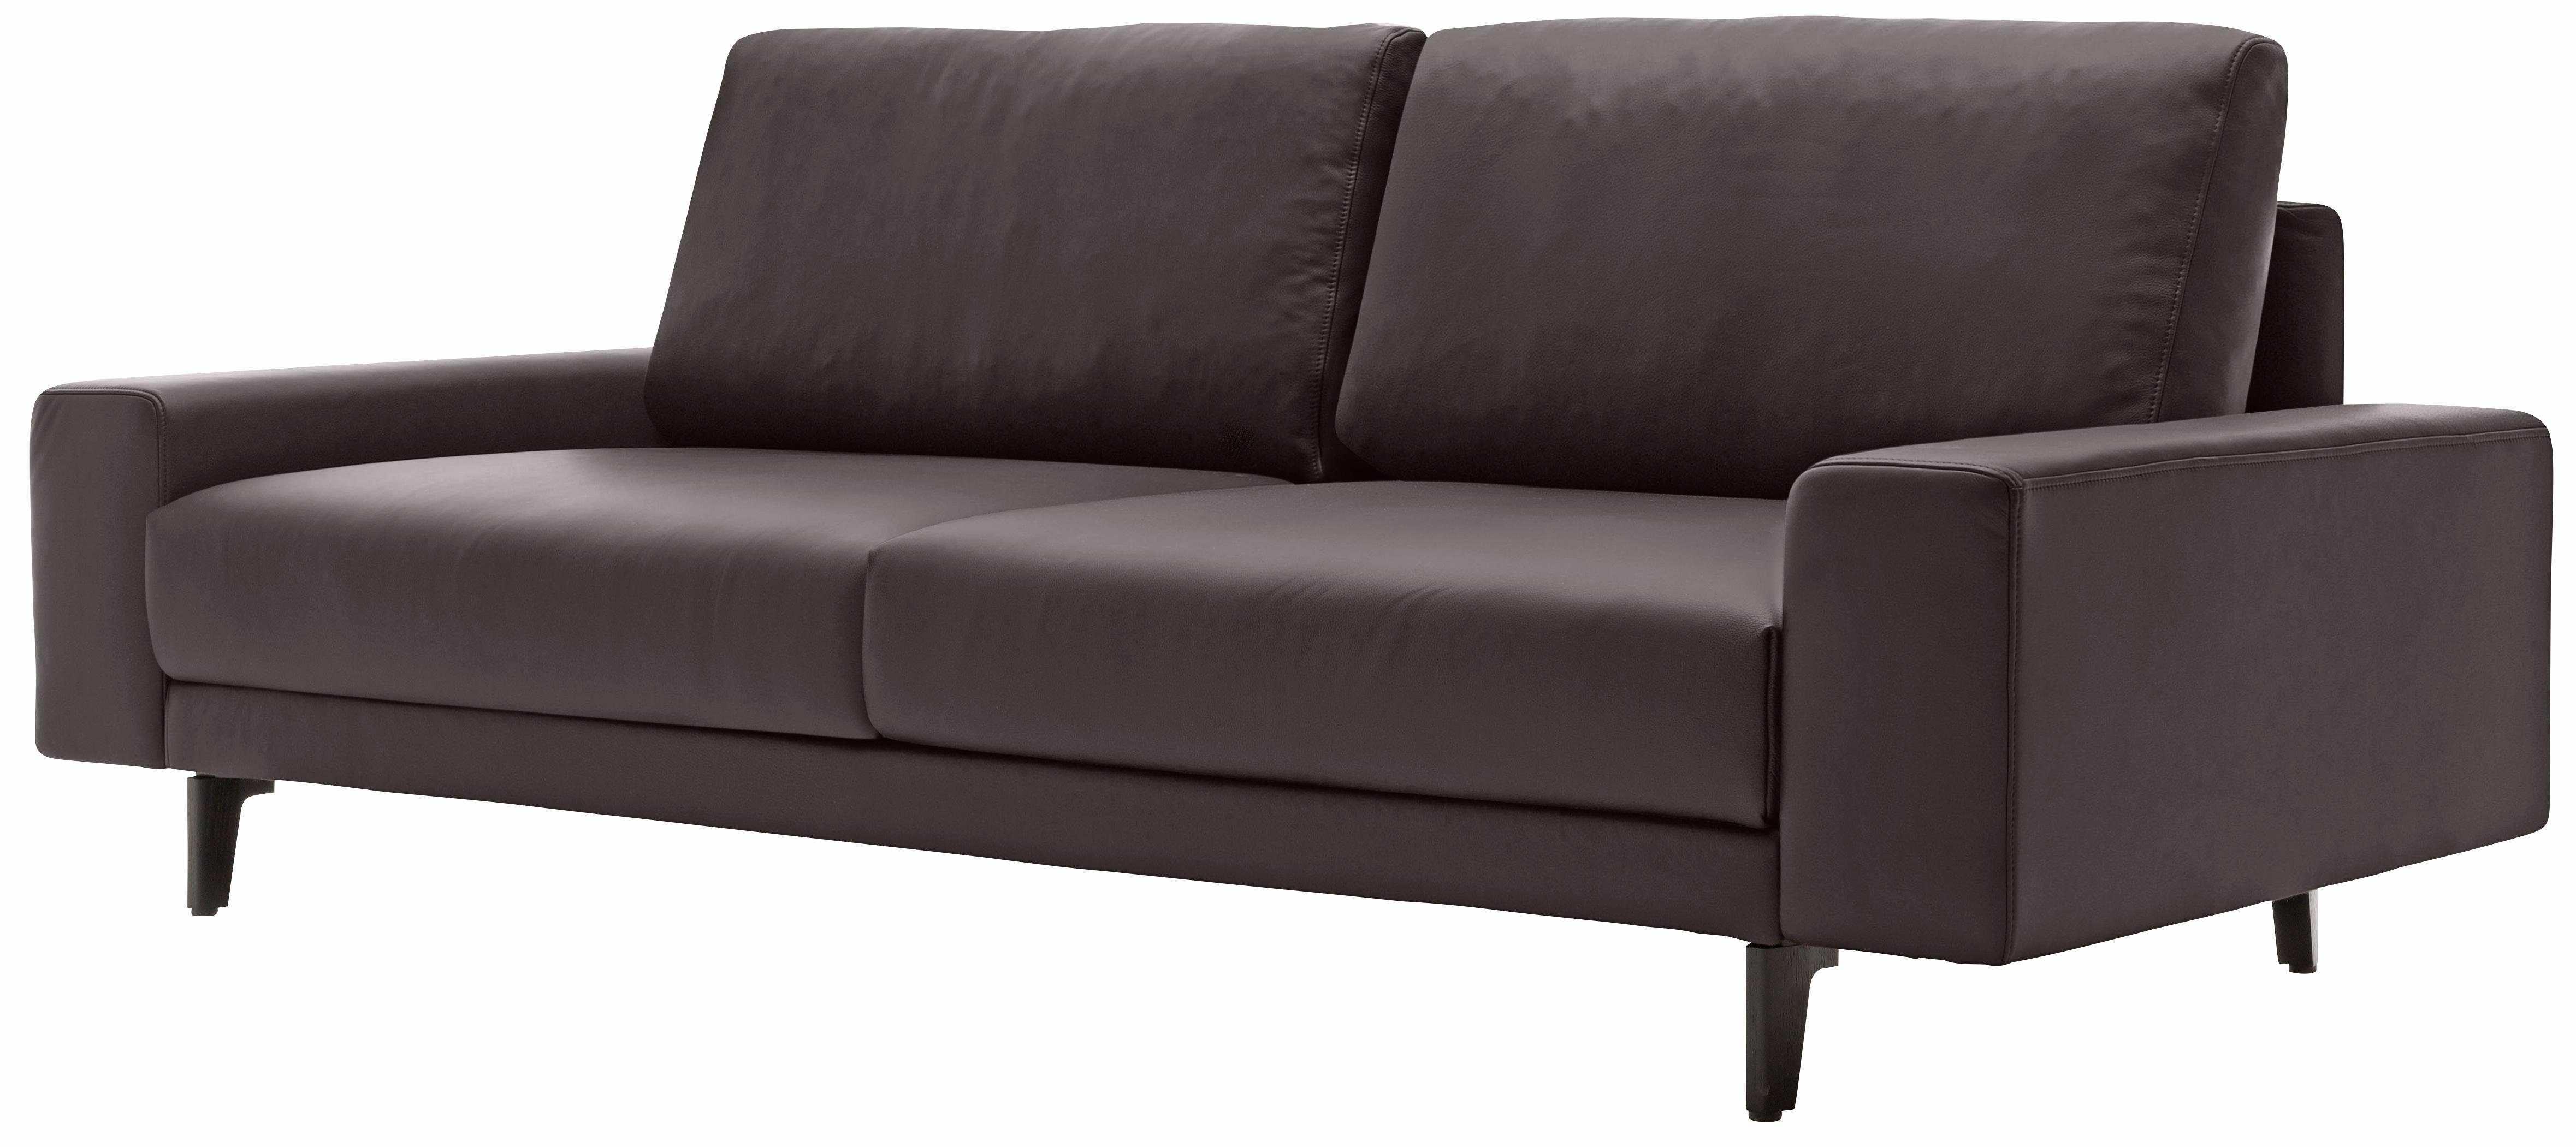 hülsta sofa 2-Sitzer hs.450, in niedrig, Armlehne cm umbragrau, Alugussfüße breit Breite 180